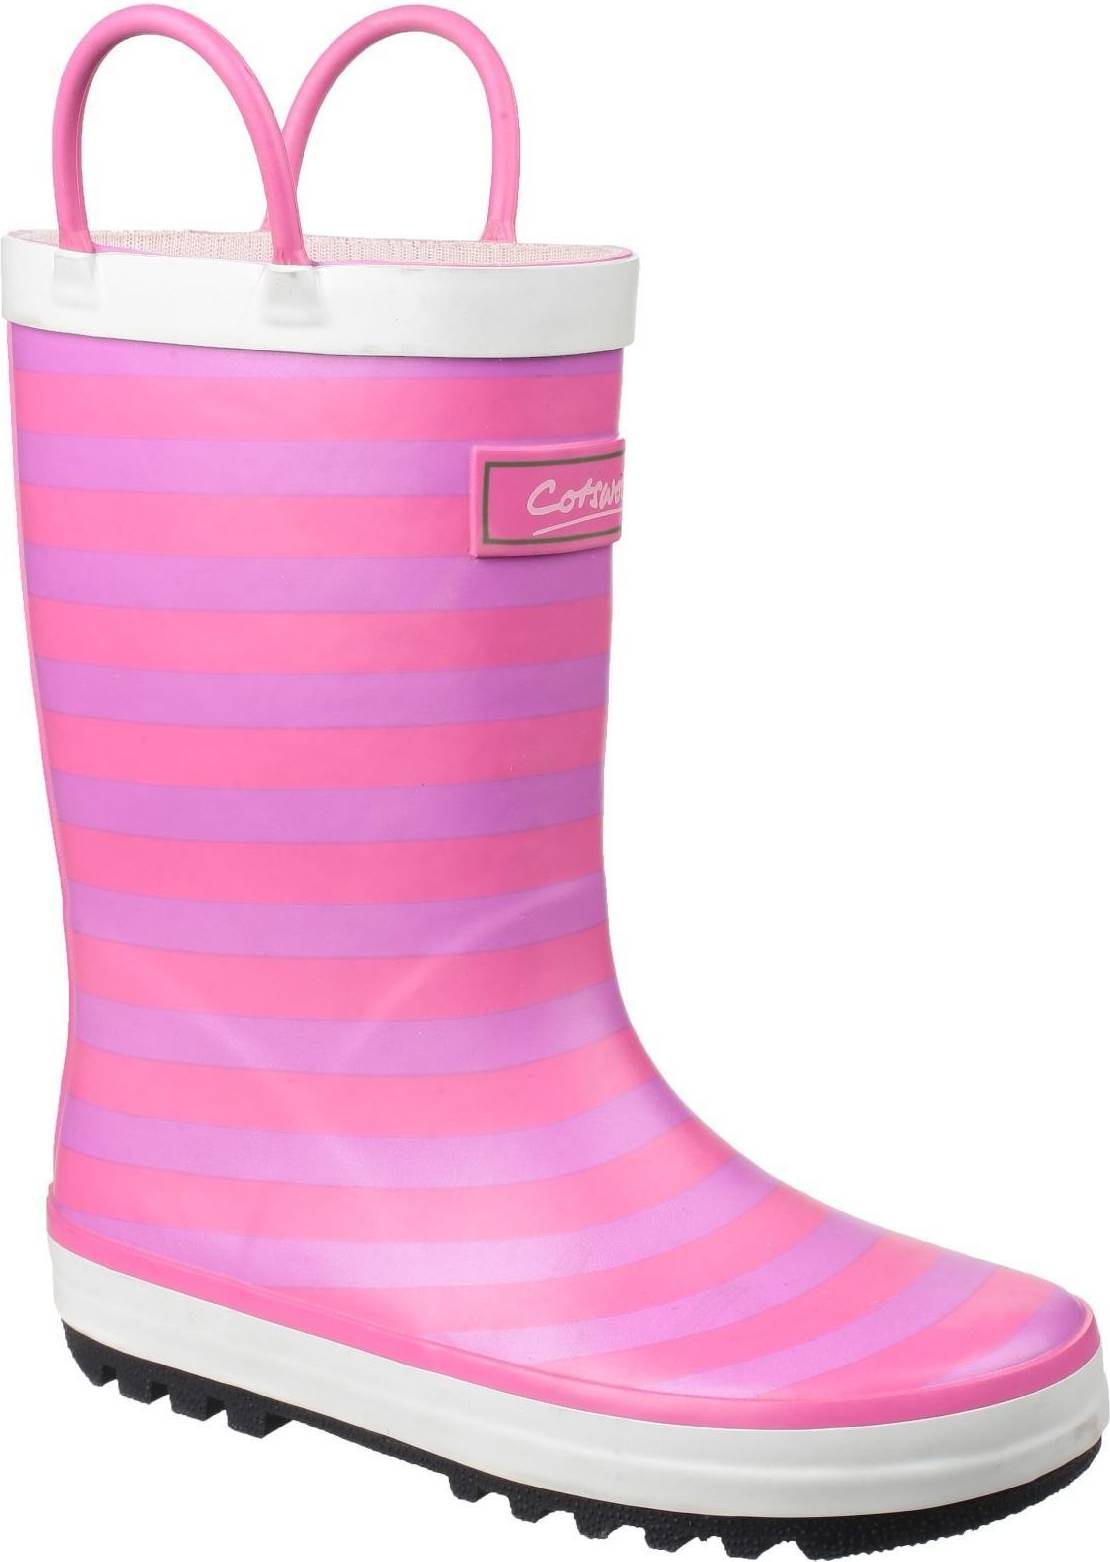  Bild på Cotswold Childrens/Kids Captain Striped Wellington Boots - Pink gummistövlar